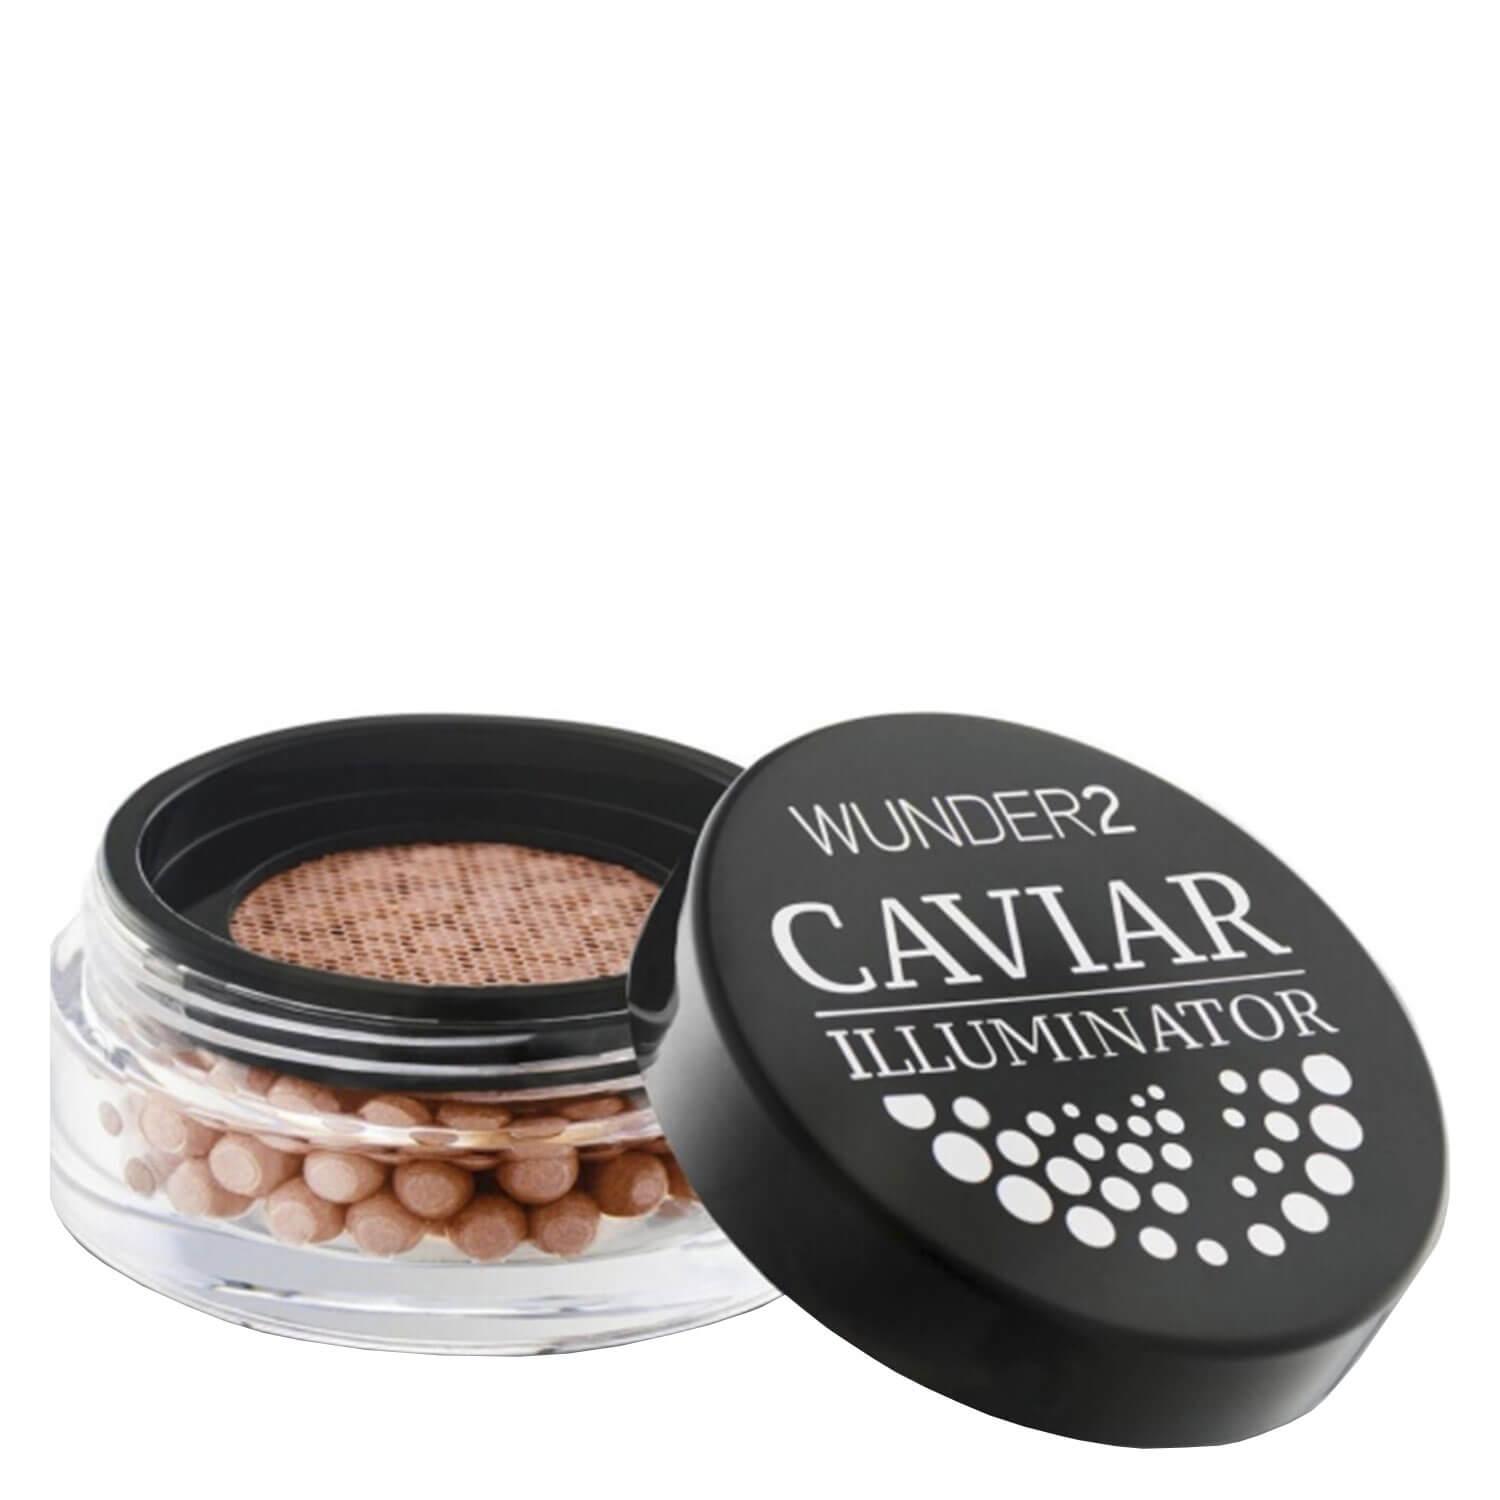 WUNDER2 - Caviar Illuminator Coral Shimmer